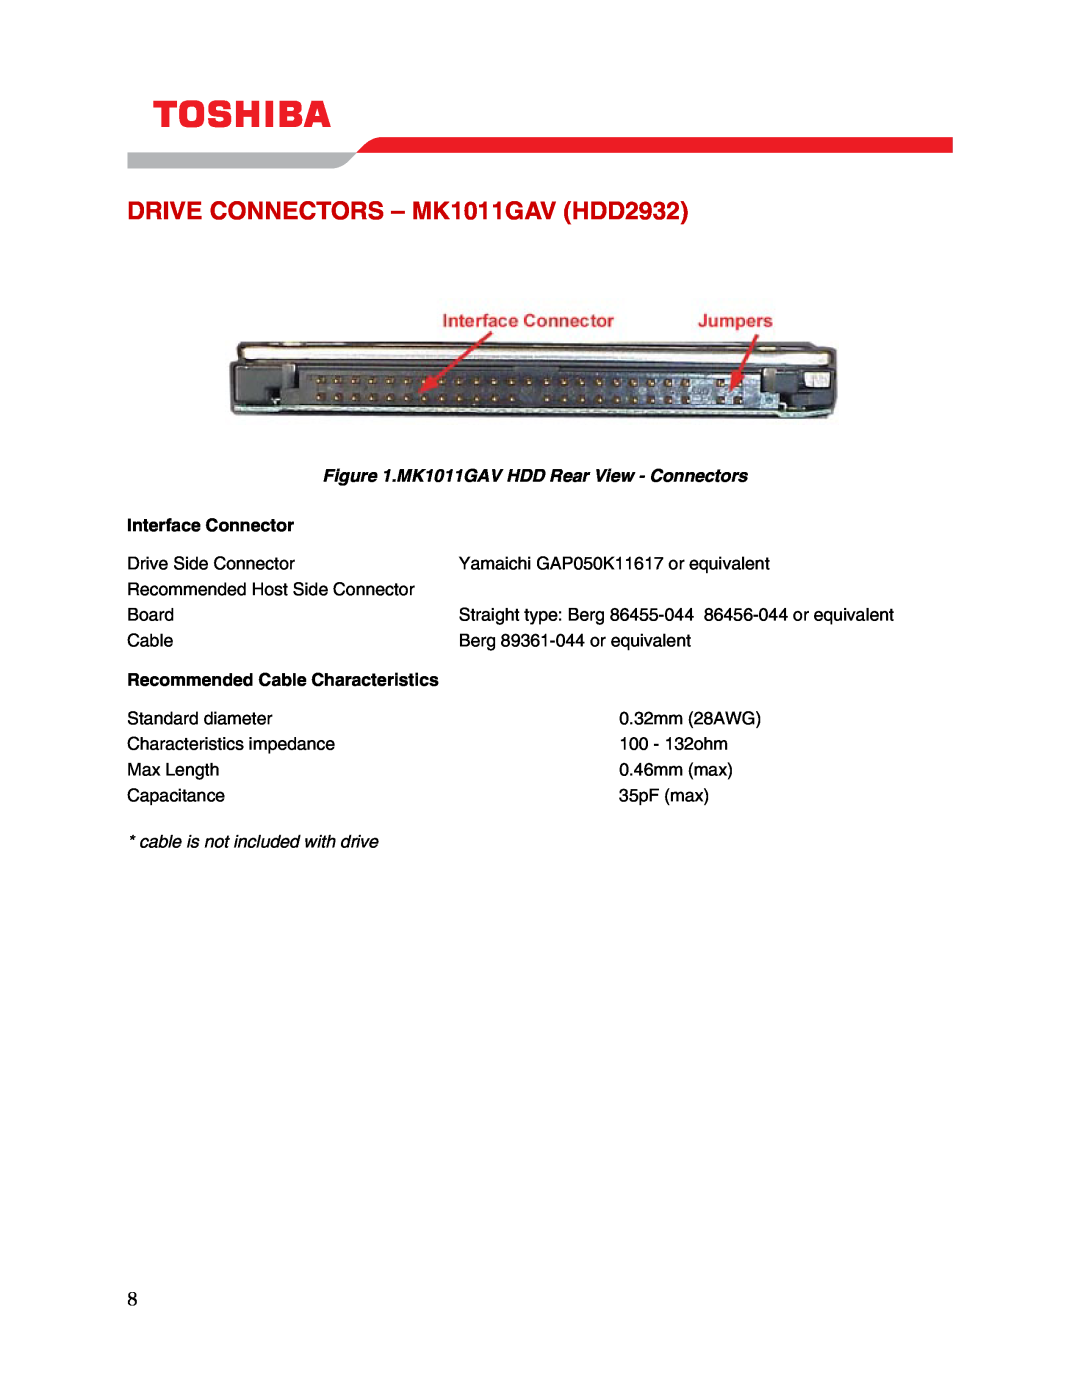 Toshiba user manual DRIVE CONNECTORS - MK1011GAV HDD2932, MK1011GAV HDD Rear View - Connectors, Interface Connector 